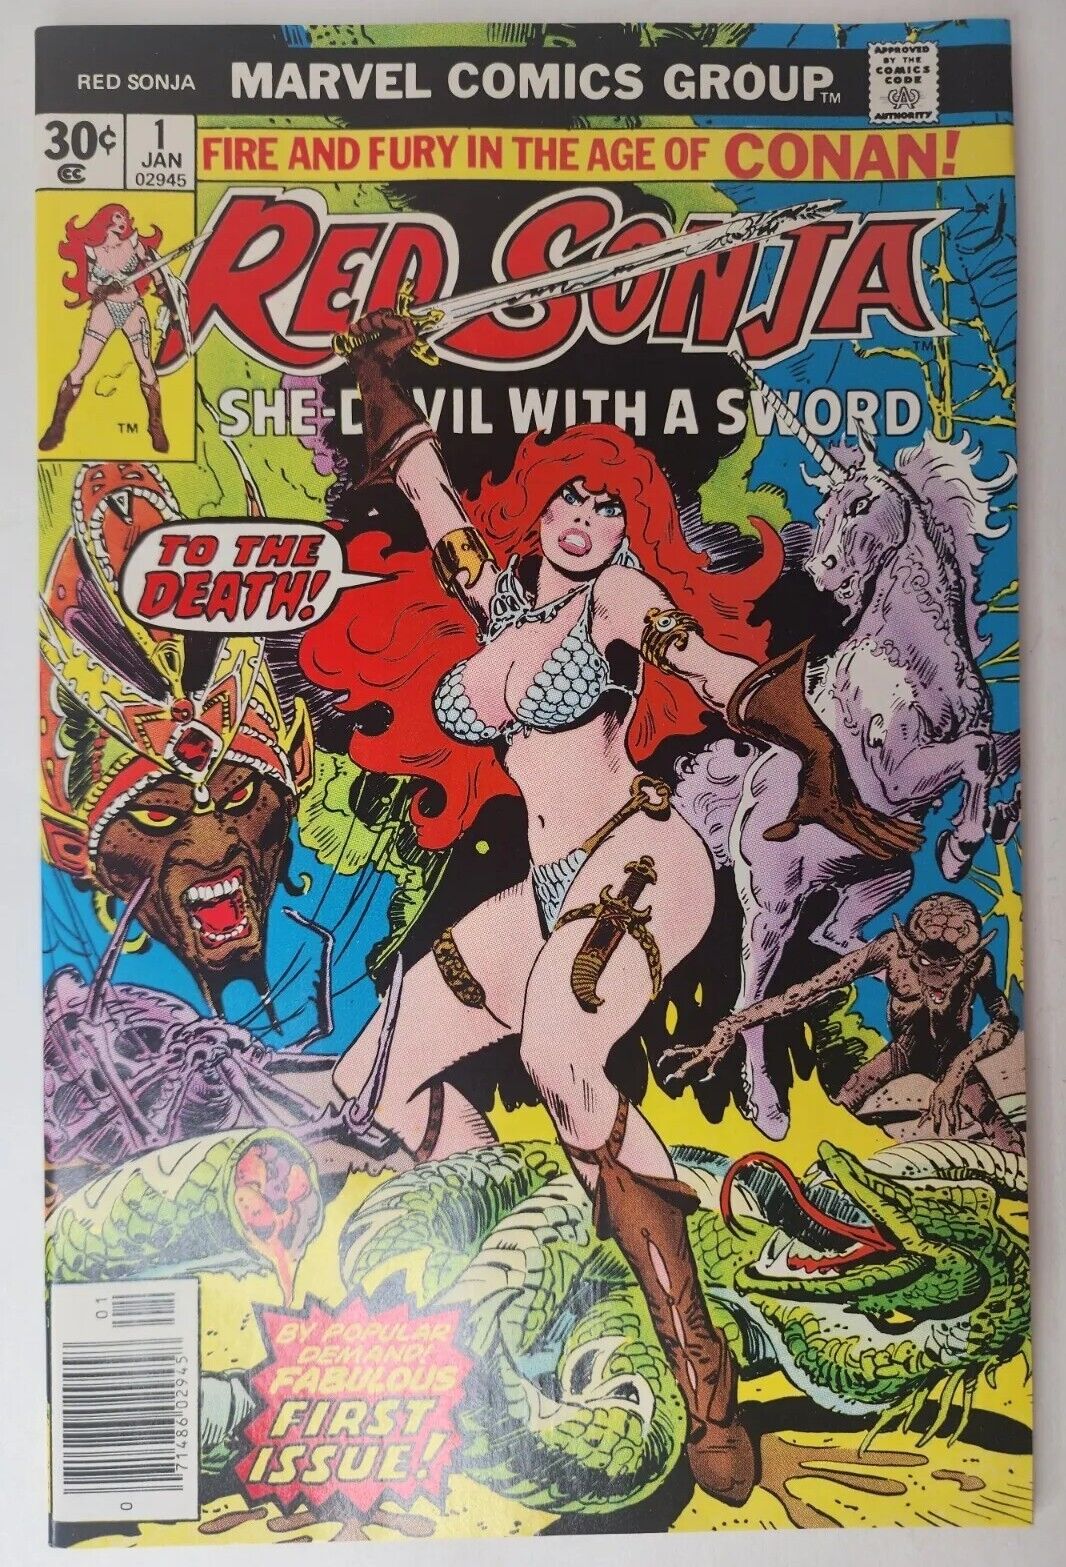 Vintage Marvel Comics Group Sonja #1 (1977) - *The Blood of the Unicorn*